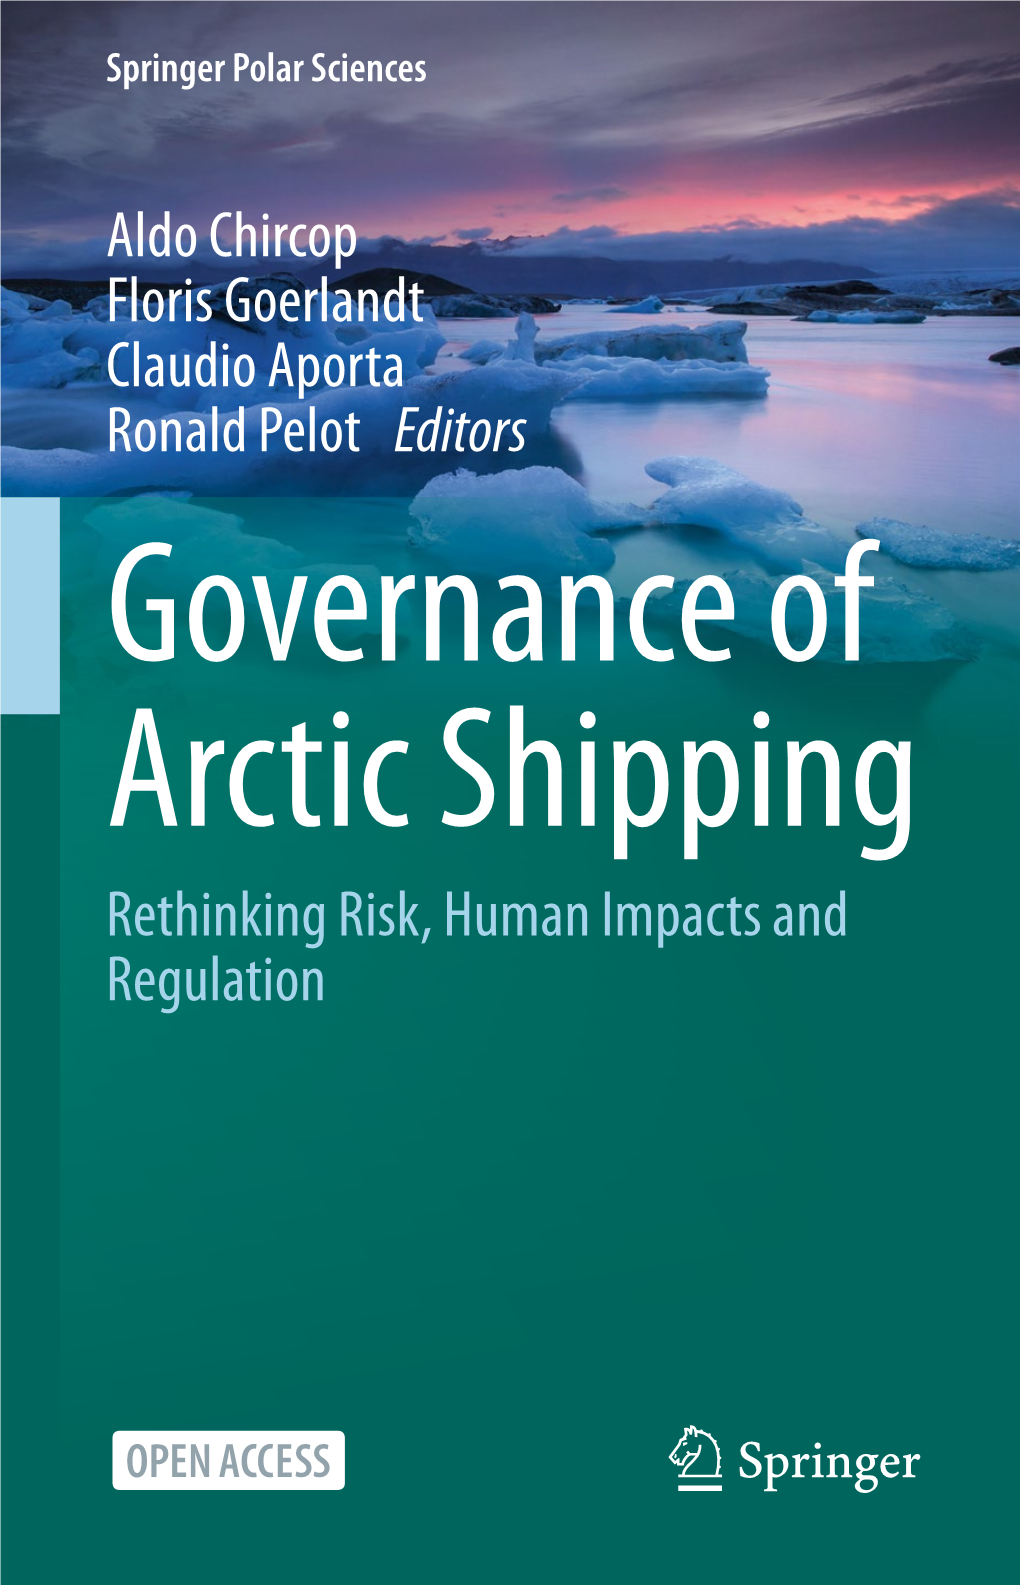 Aldo Chircop Floris Goerlandt Claudio Aporta Ronald Pelot Editors Governance of Arctic Shipping Rethinking Risk, Human Impacts and Regulation Springer Polar Sciences